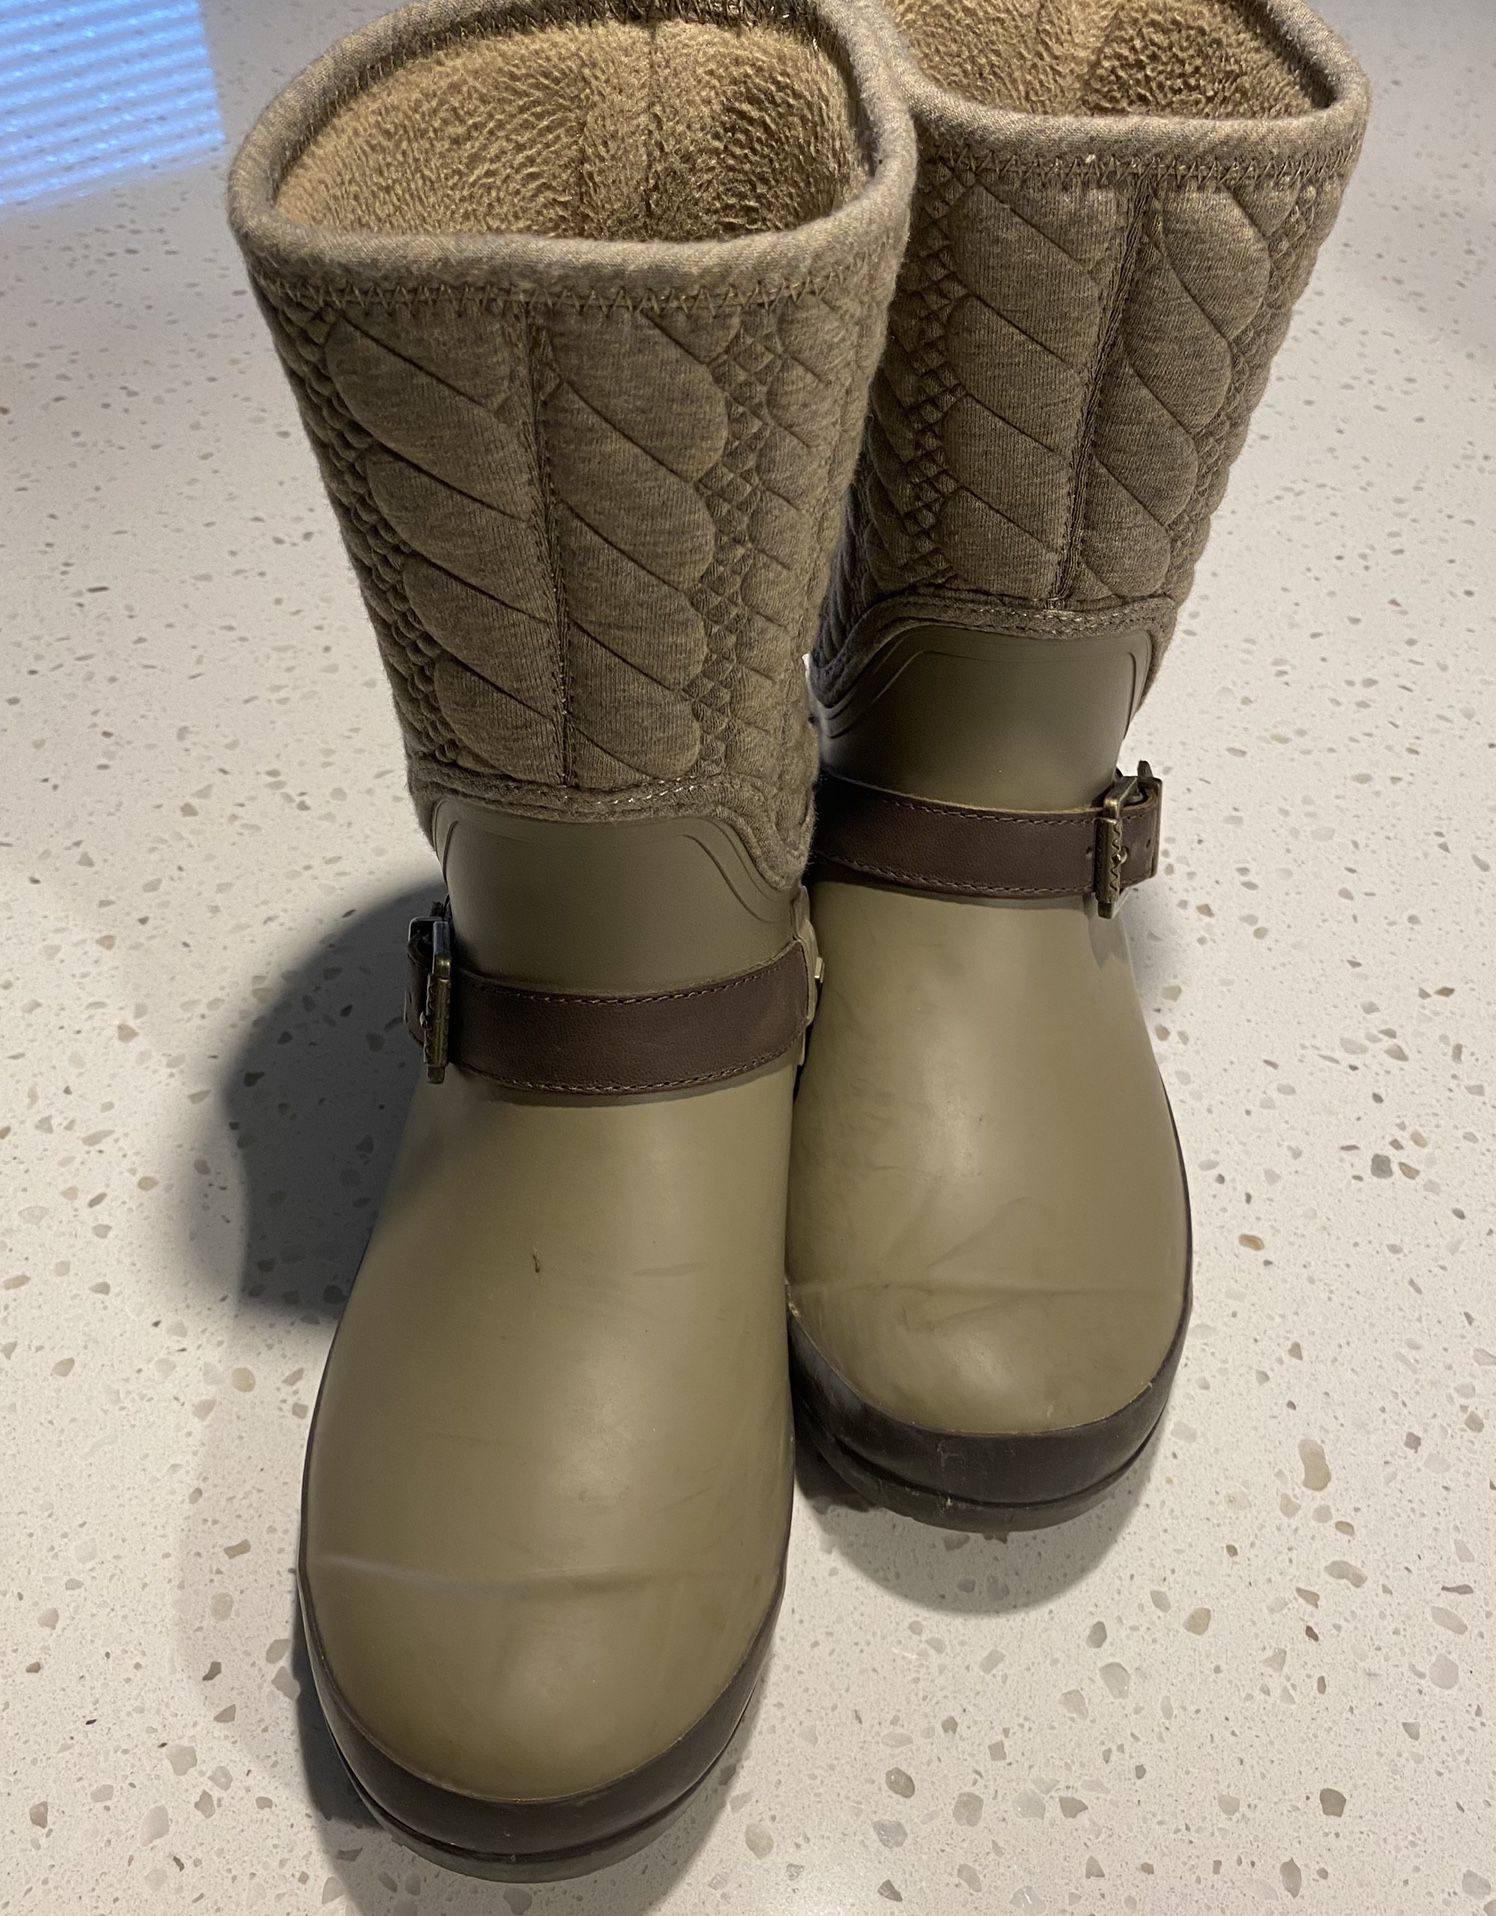 Women’s Sperry’s Size 9 Rain Boots